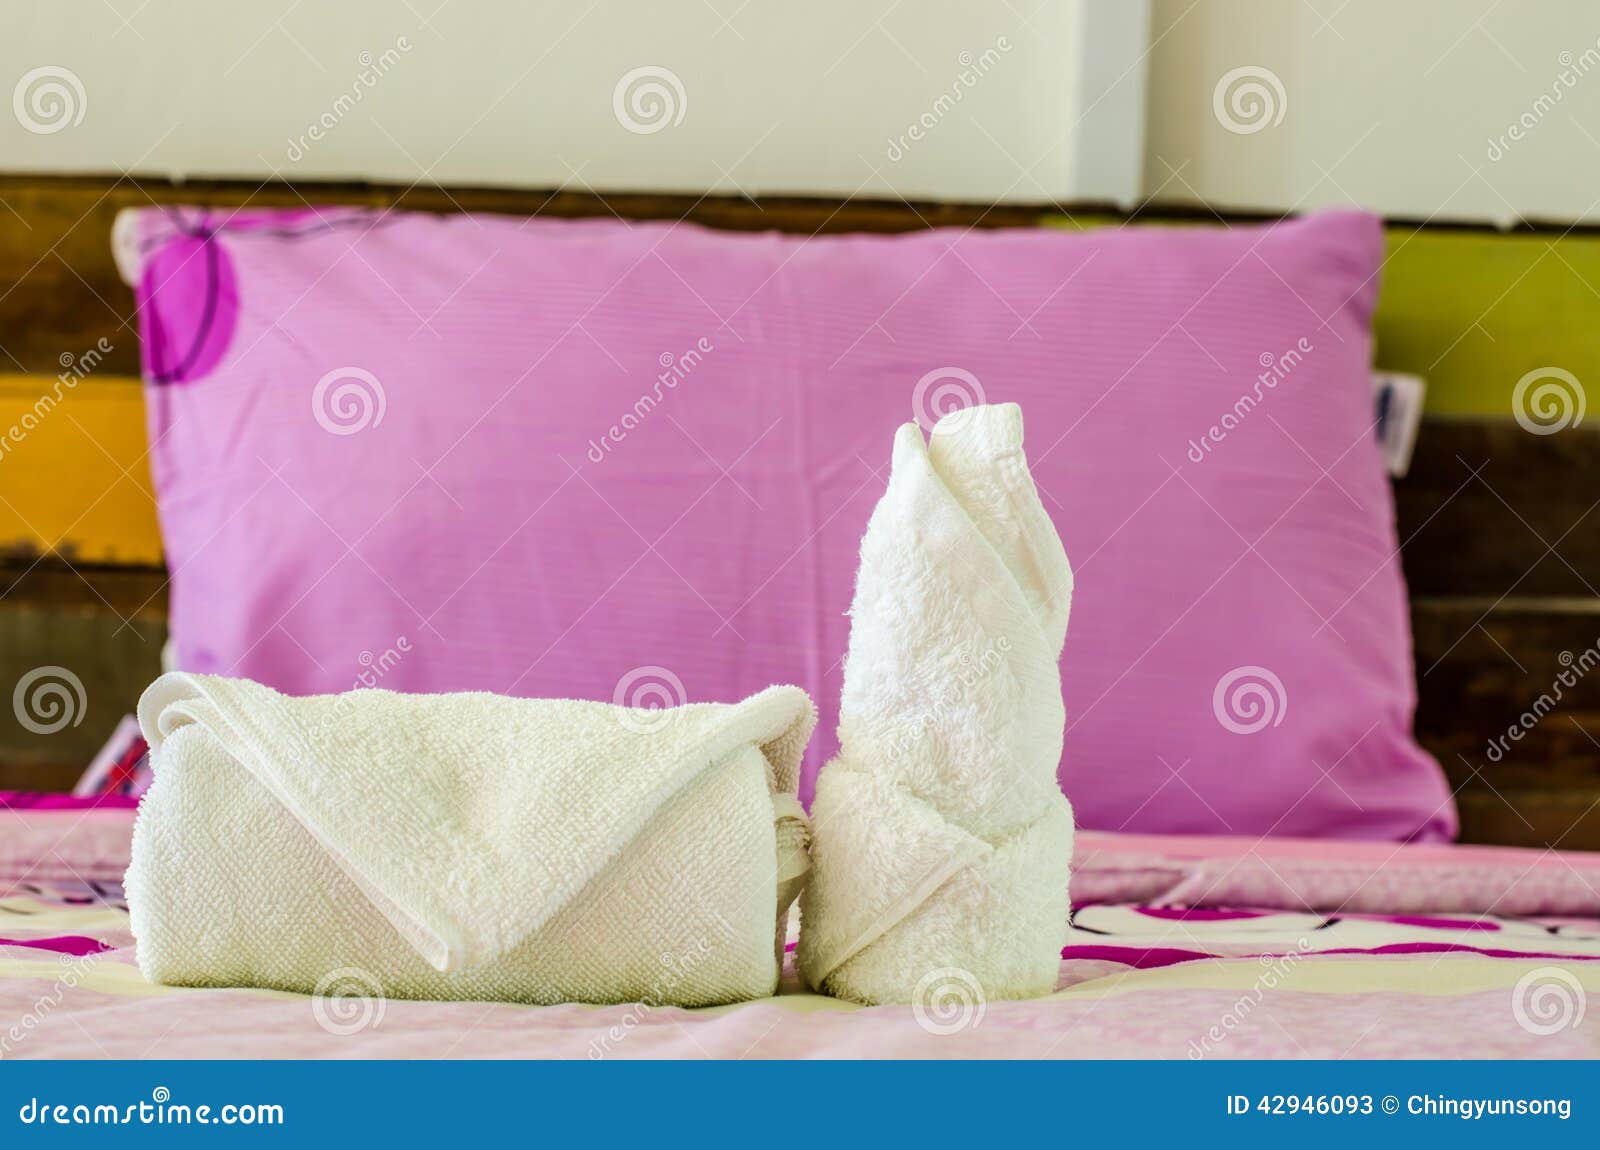 Полотенце на кровати. Полотенца на кровати в гостинице. Красиво сложенные полотенца в гостинице. Полотенца на кровати красиво сложенные. Полотенце отель кровать.